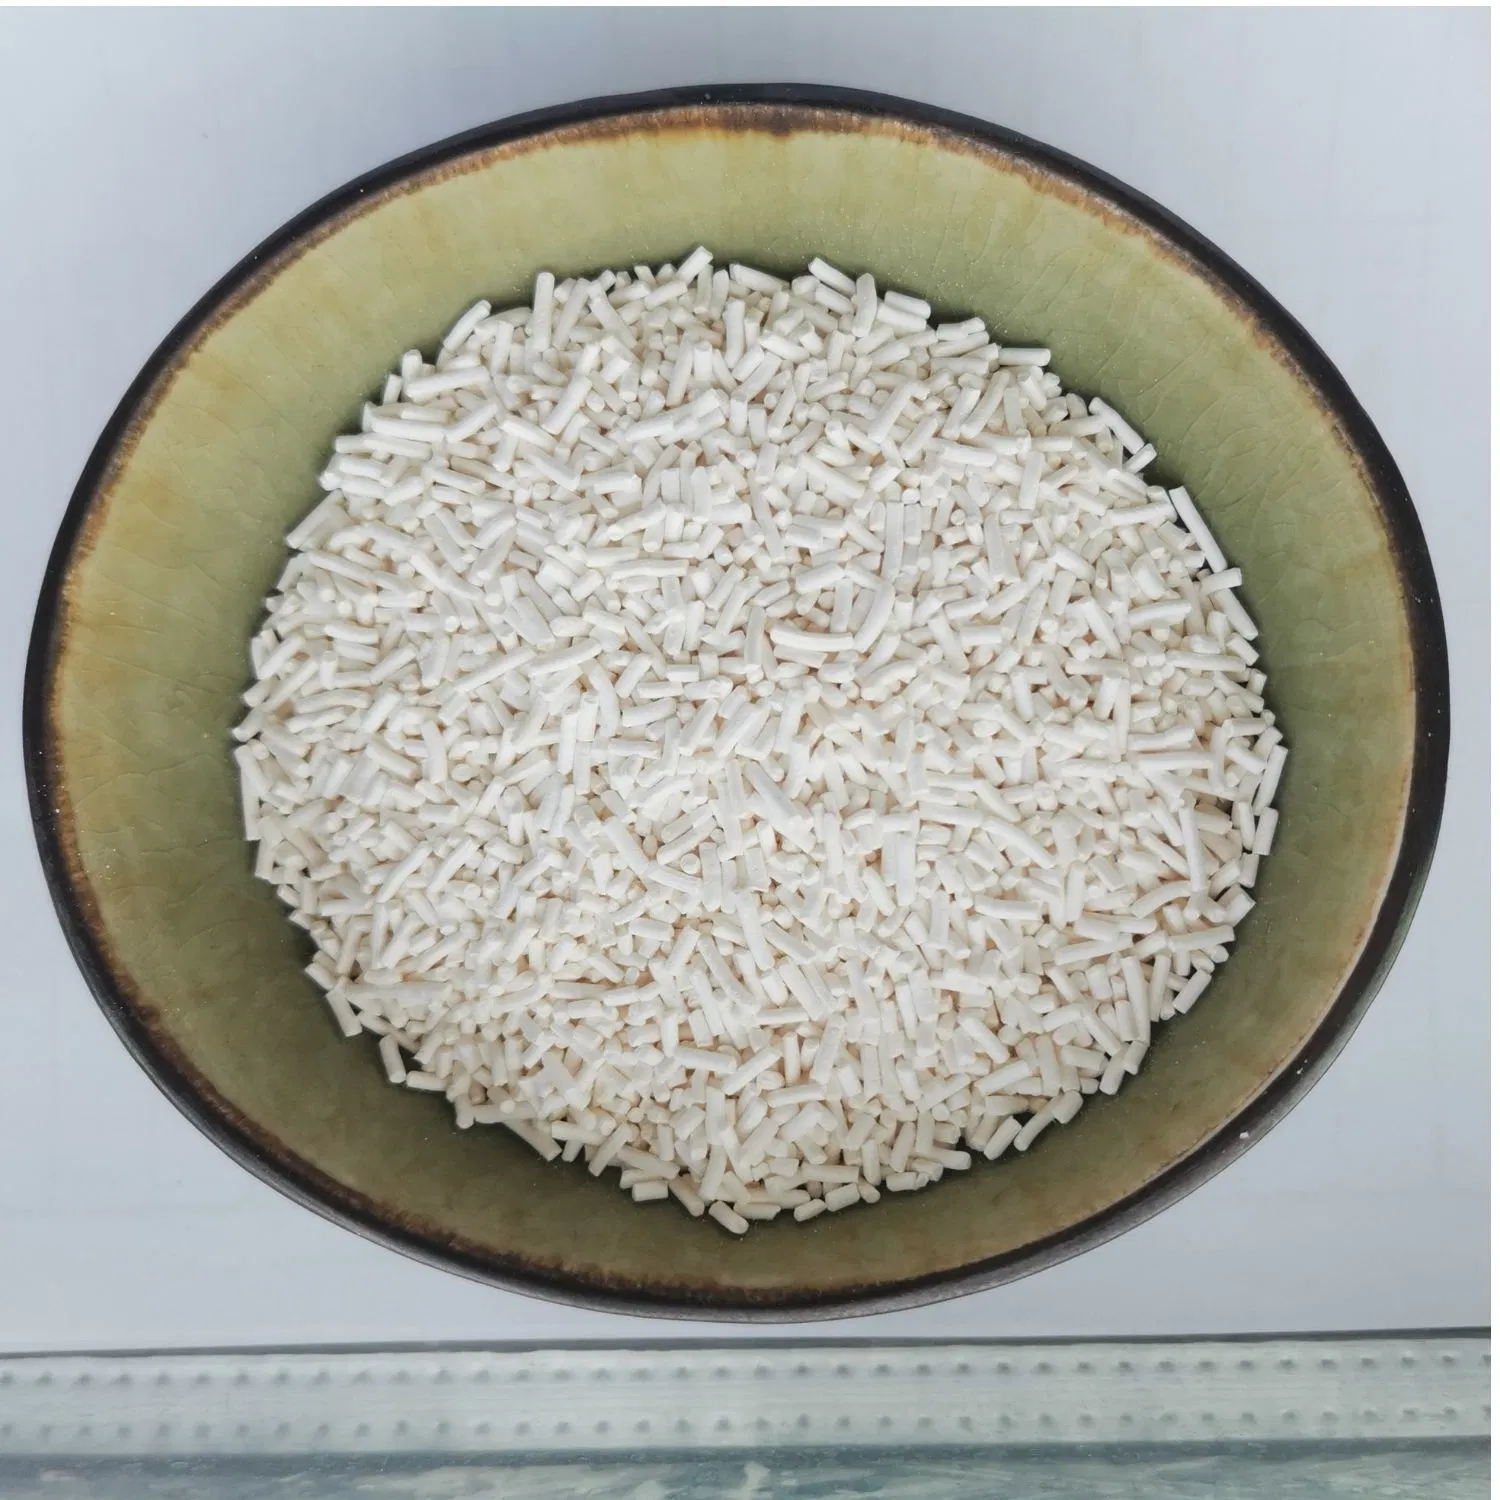 Powder/Granular Potassium Sorbate for Food Preservative